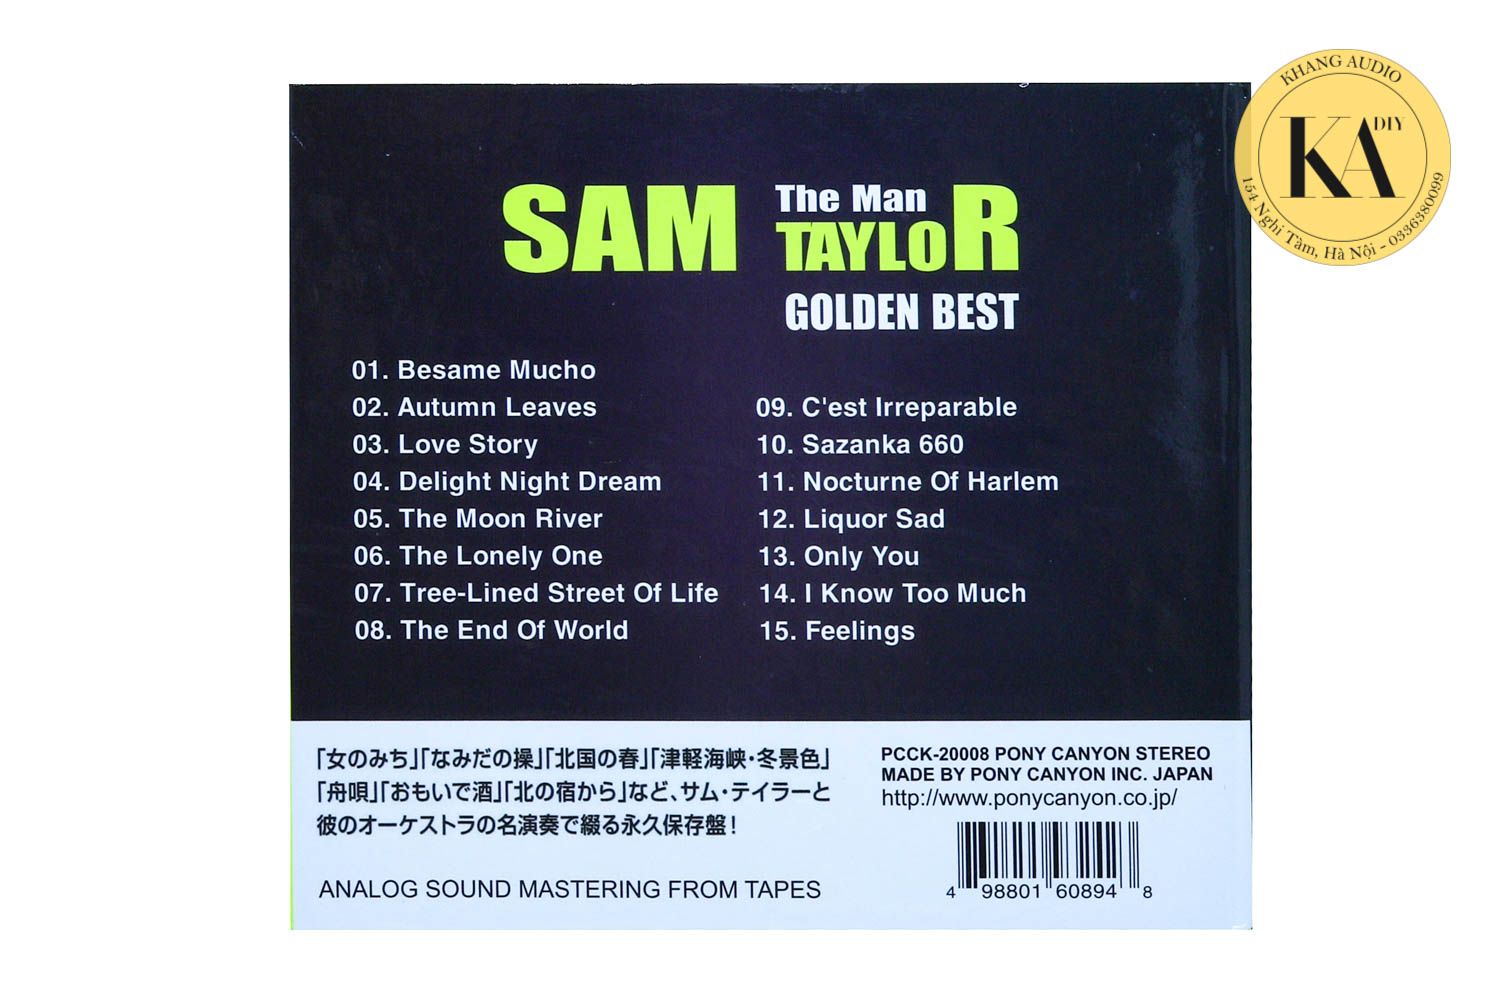 The Man Golden Best - Sam Taylor Vol.1